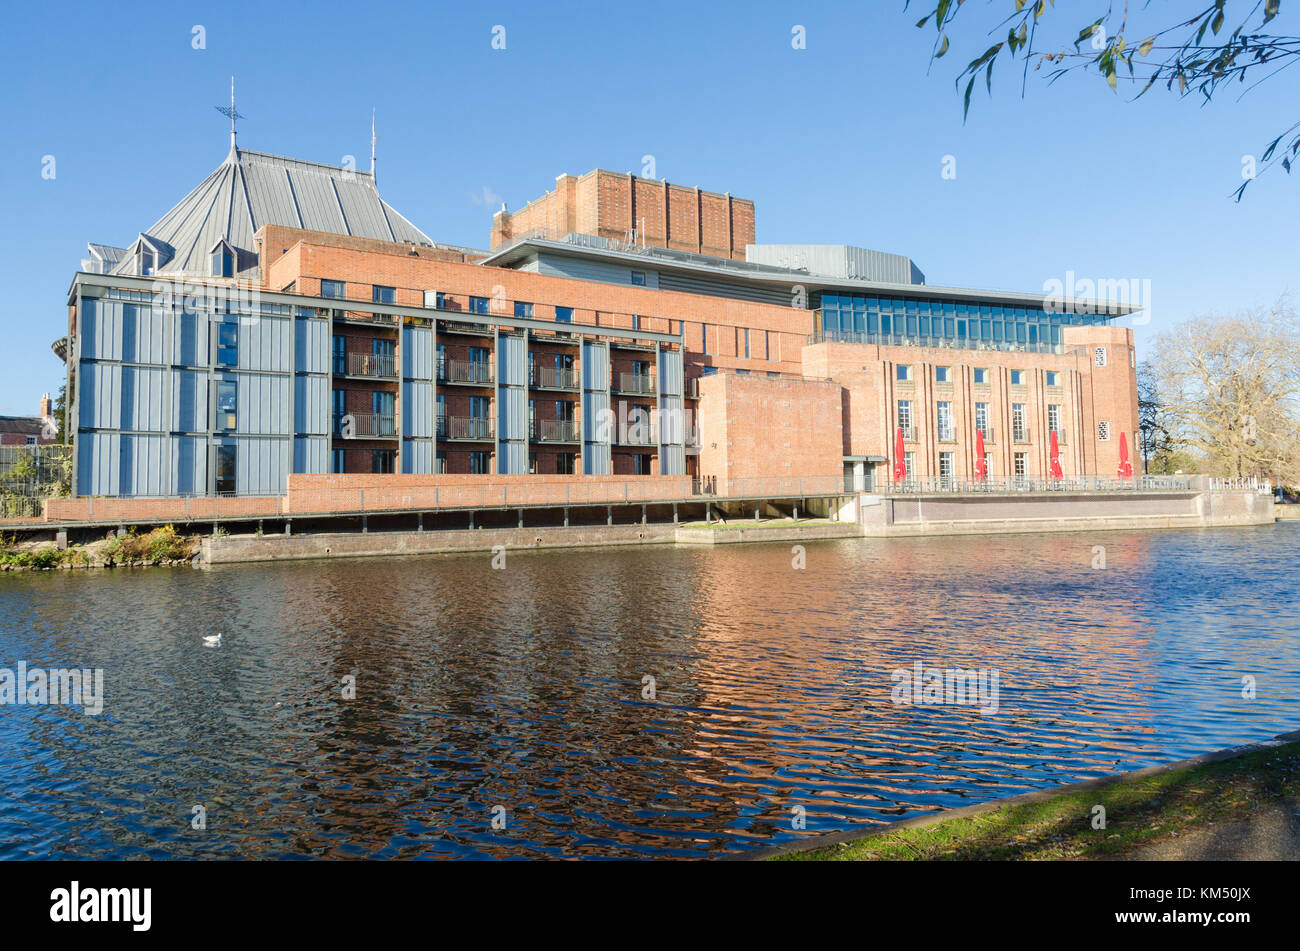 Royal Shakespeare Theatre next to the River Avon in Stratford-upon-Avon in Warwickshire, UK Stock Photo